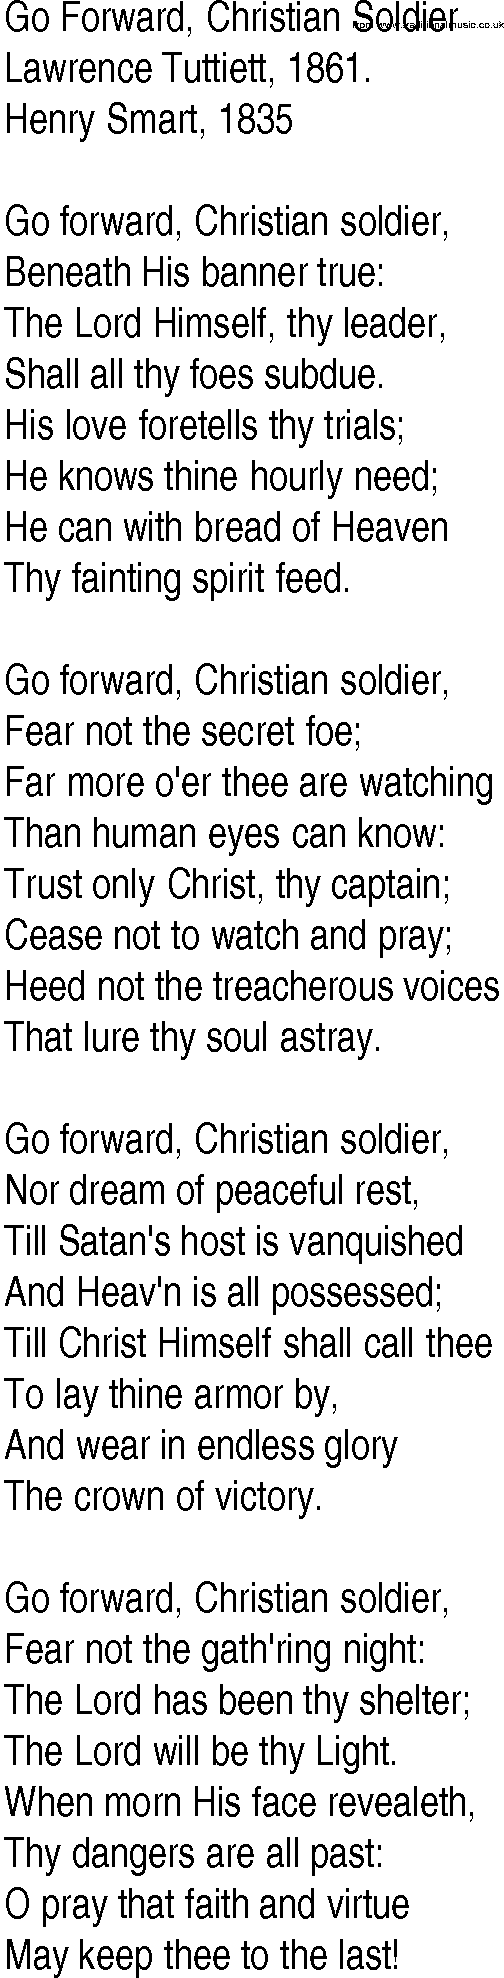 Hymn and Gospel Song: Go Forward, Christian Soldier by Lawrence Tuttiett lyrics